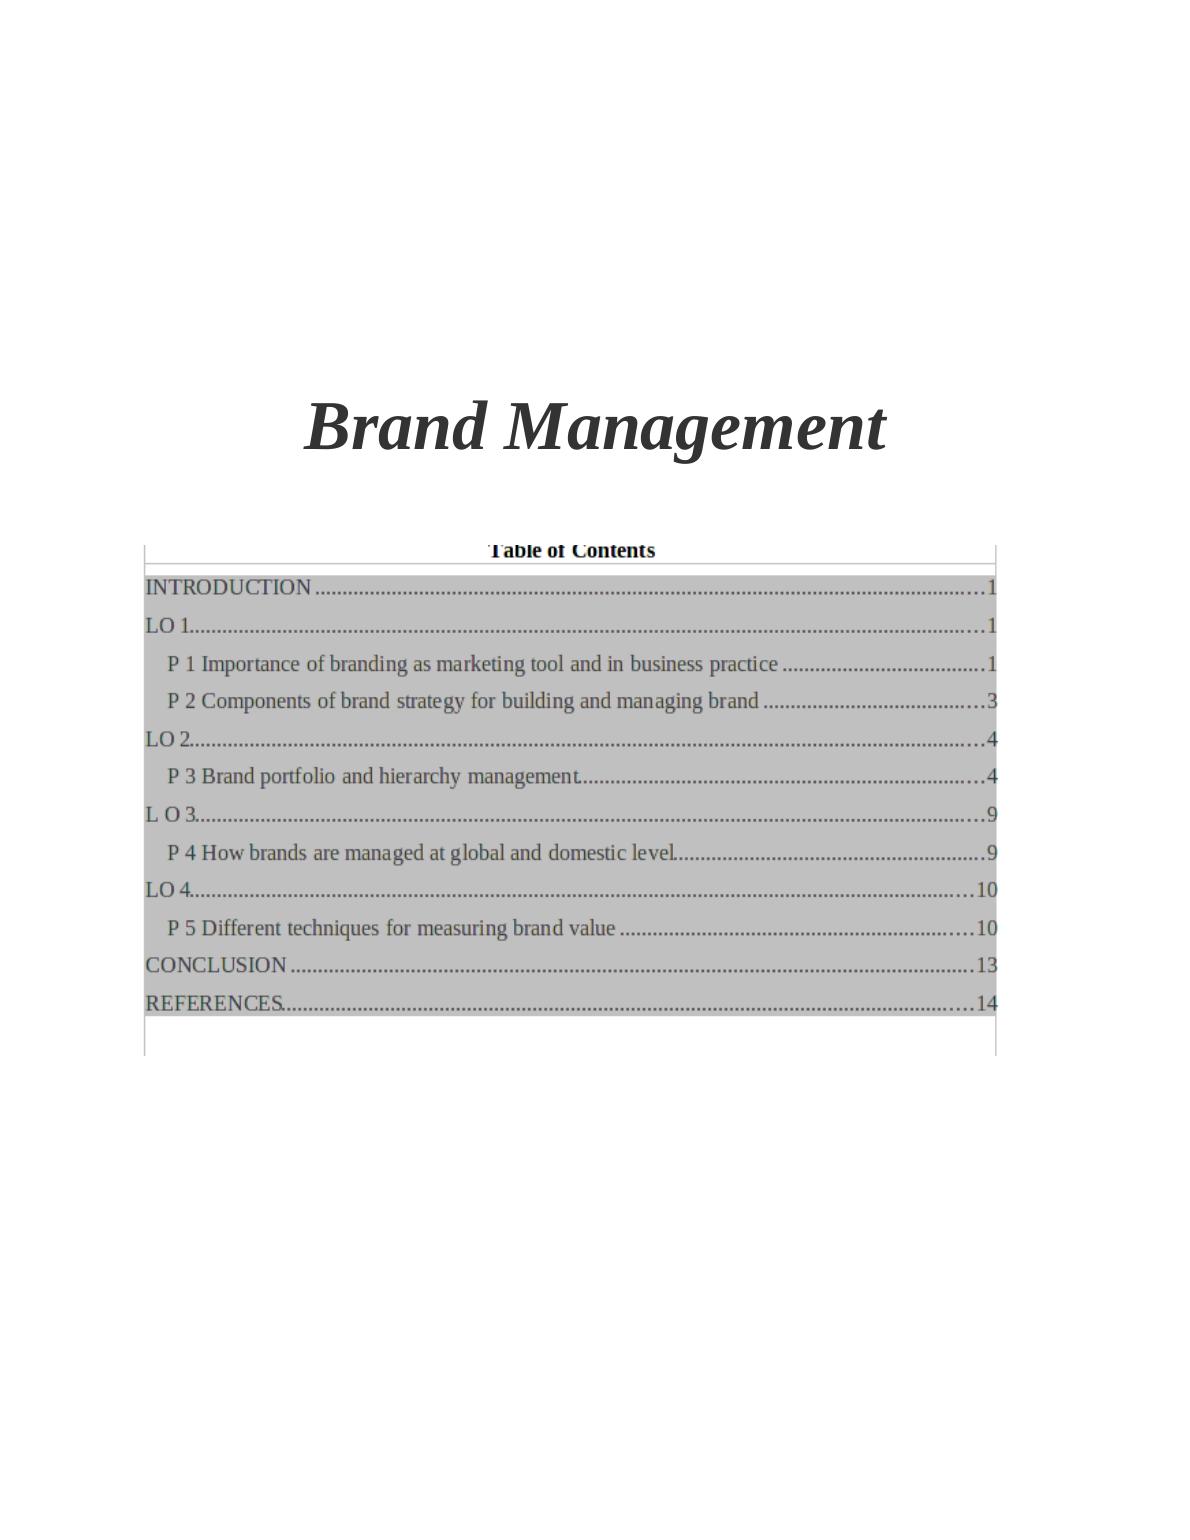 Brand management assignment PDF - Samsung_1